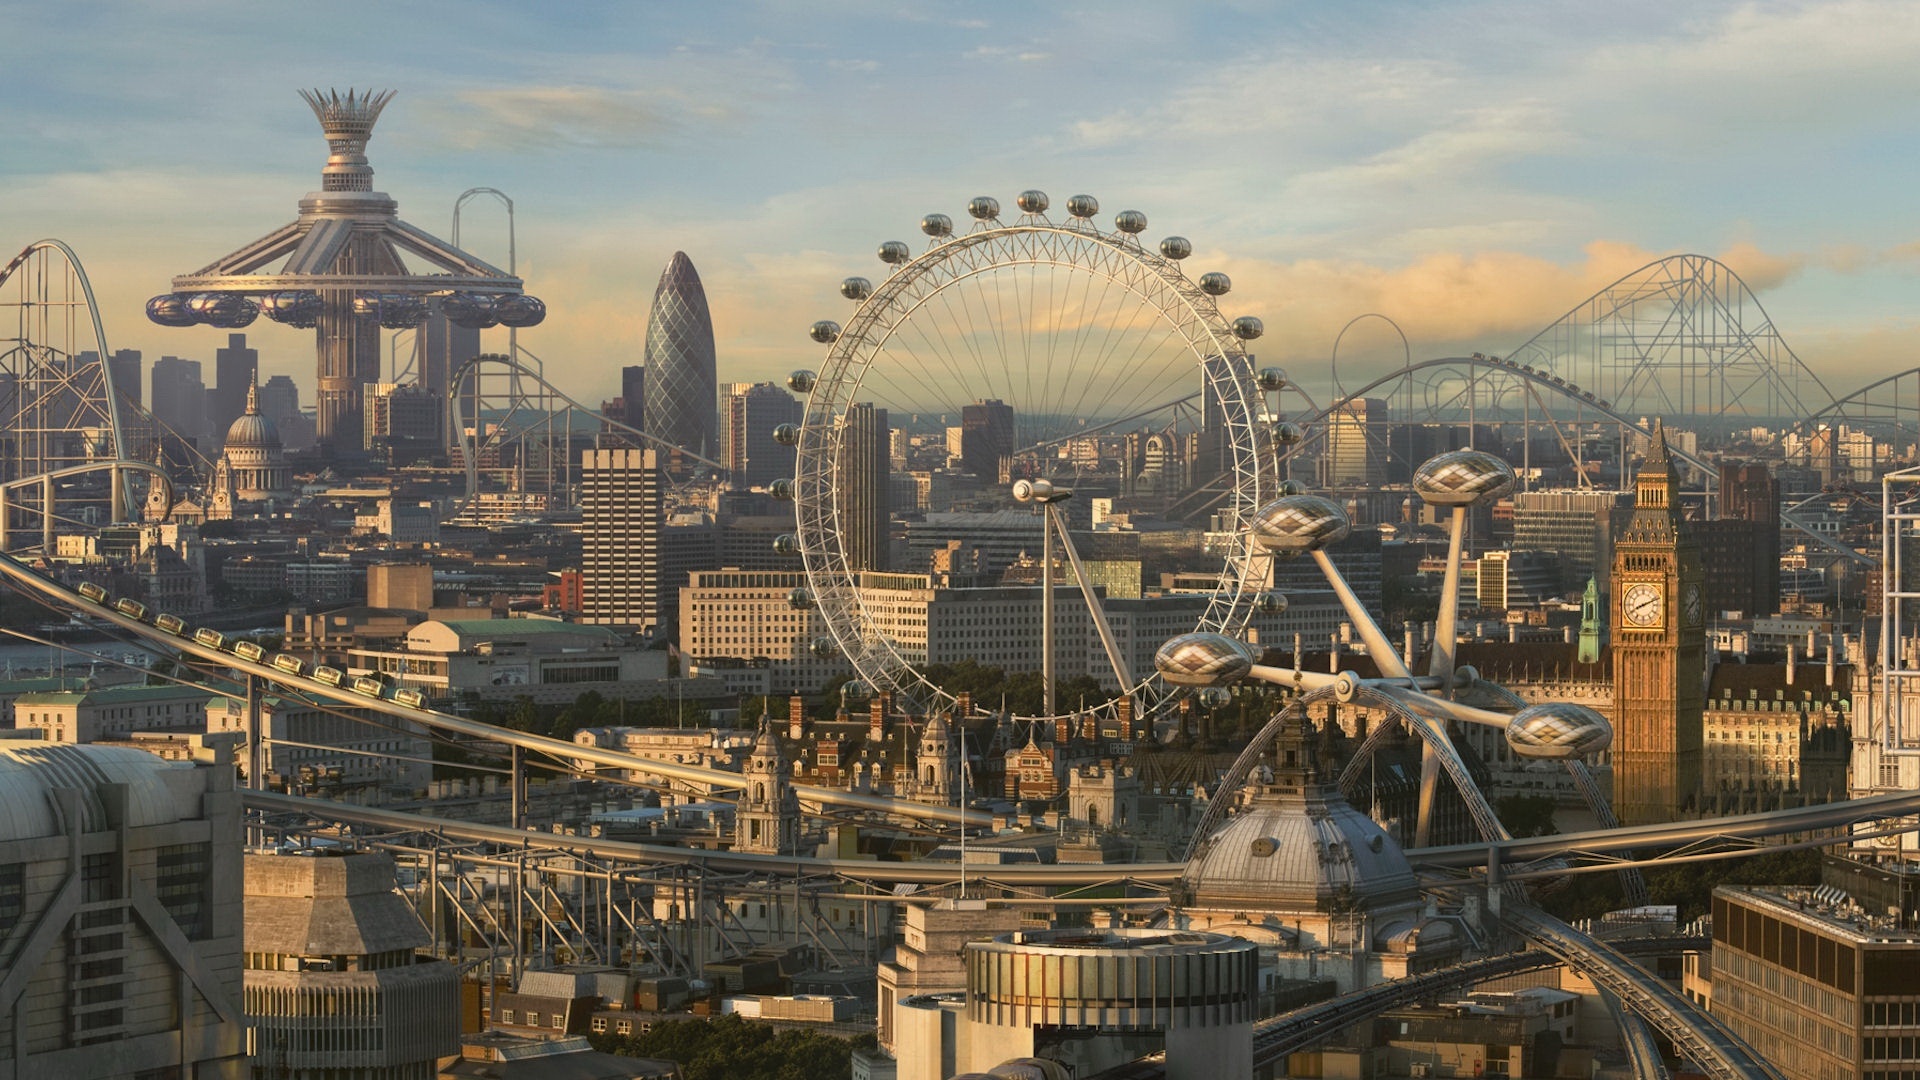 Futuristic Theme Park City